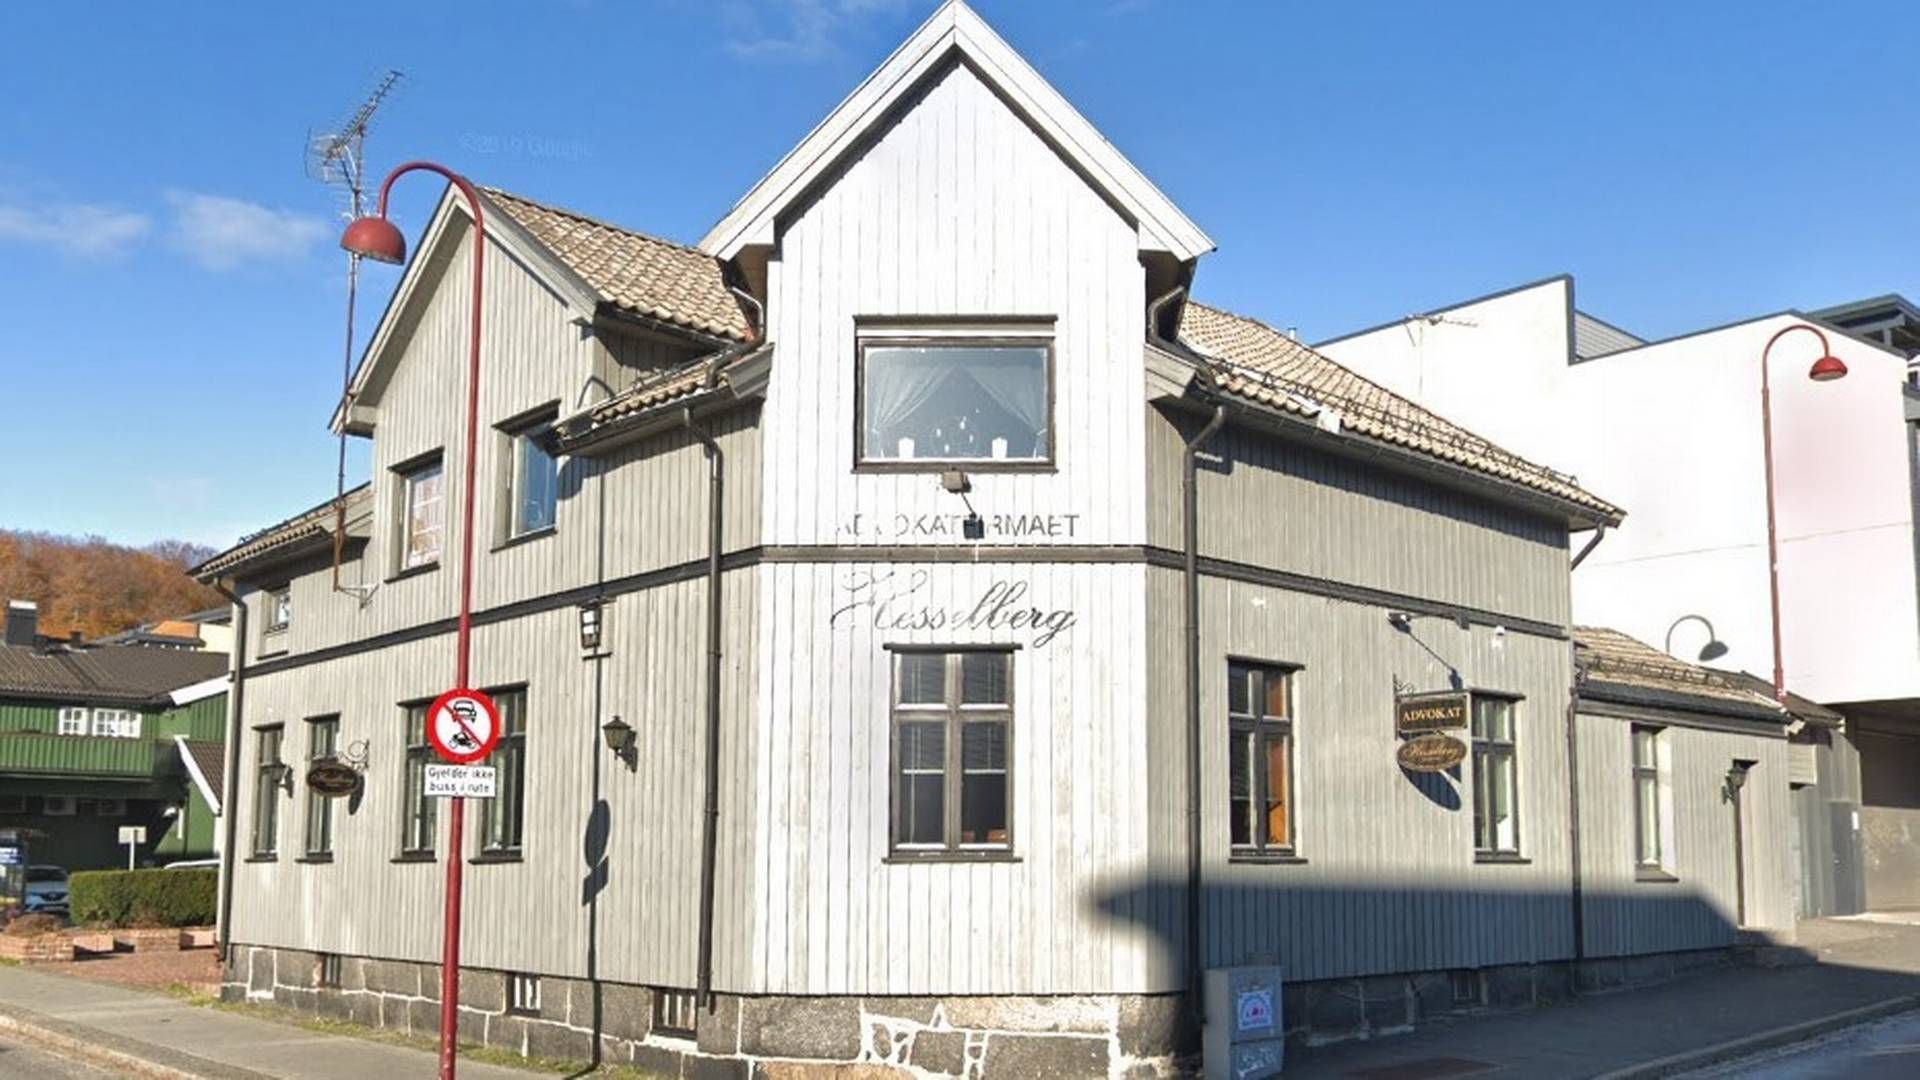 Advokatfirmaet Hesselberg AS er registrert med adresse i Jegersborggata i Larvik. | Foto: Google Street View